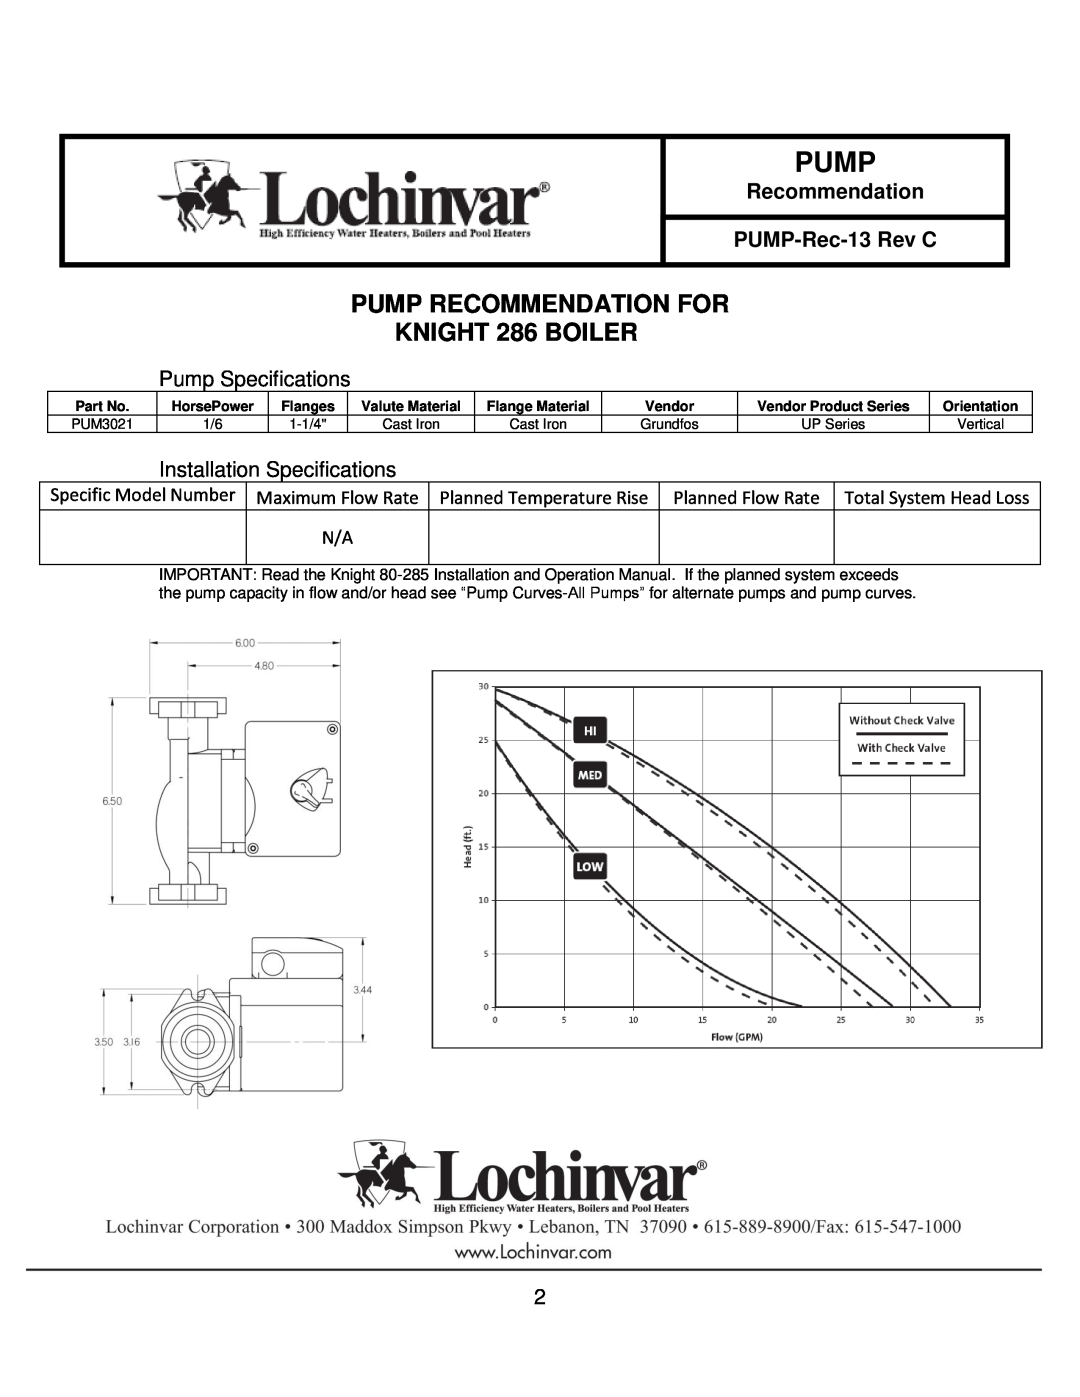 Lochinvar 051-211 PUMP RECOMMENDATION FOR KNIGHT 286 BOILER, Recommendation PUMP-Rec-13 Rev C, Pump Specifications 